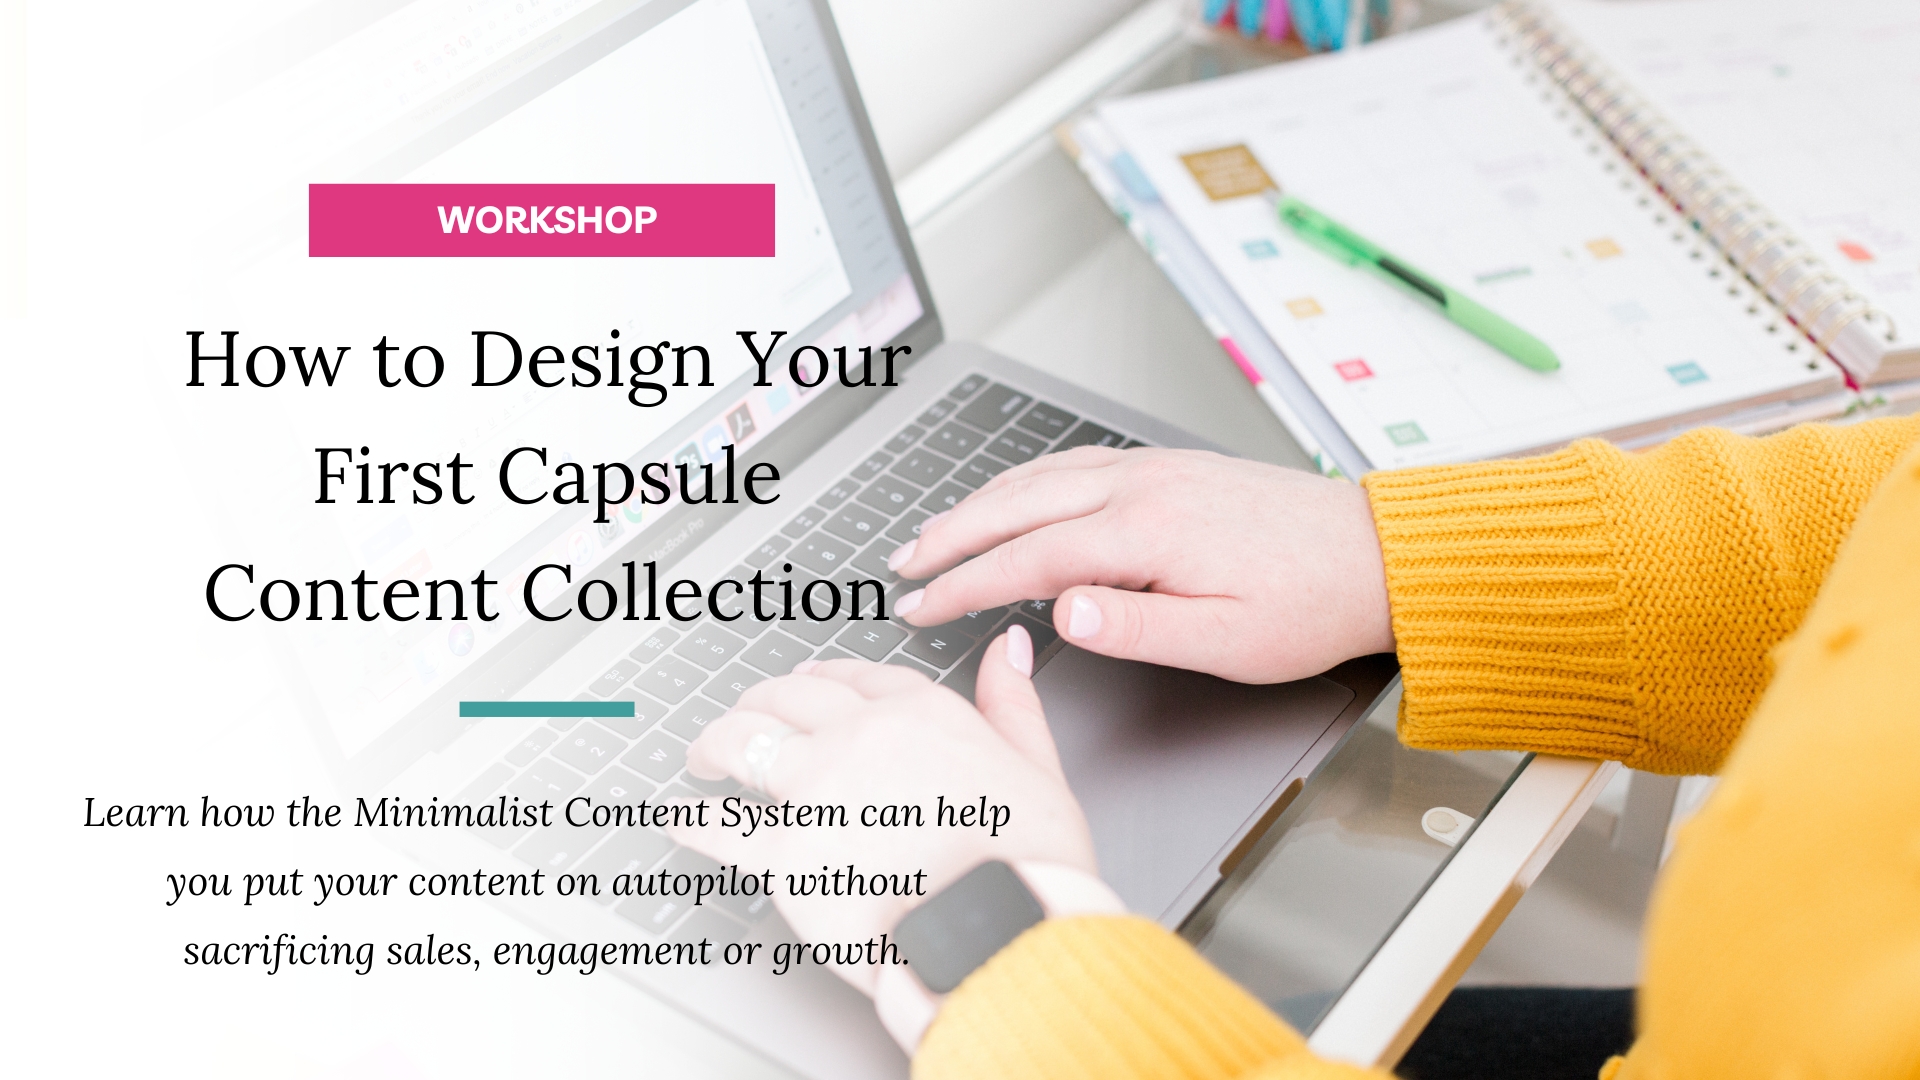 Capsule Content Collection Workshop - Your Content Empire